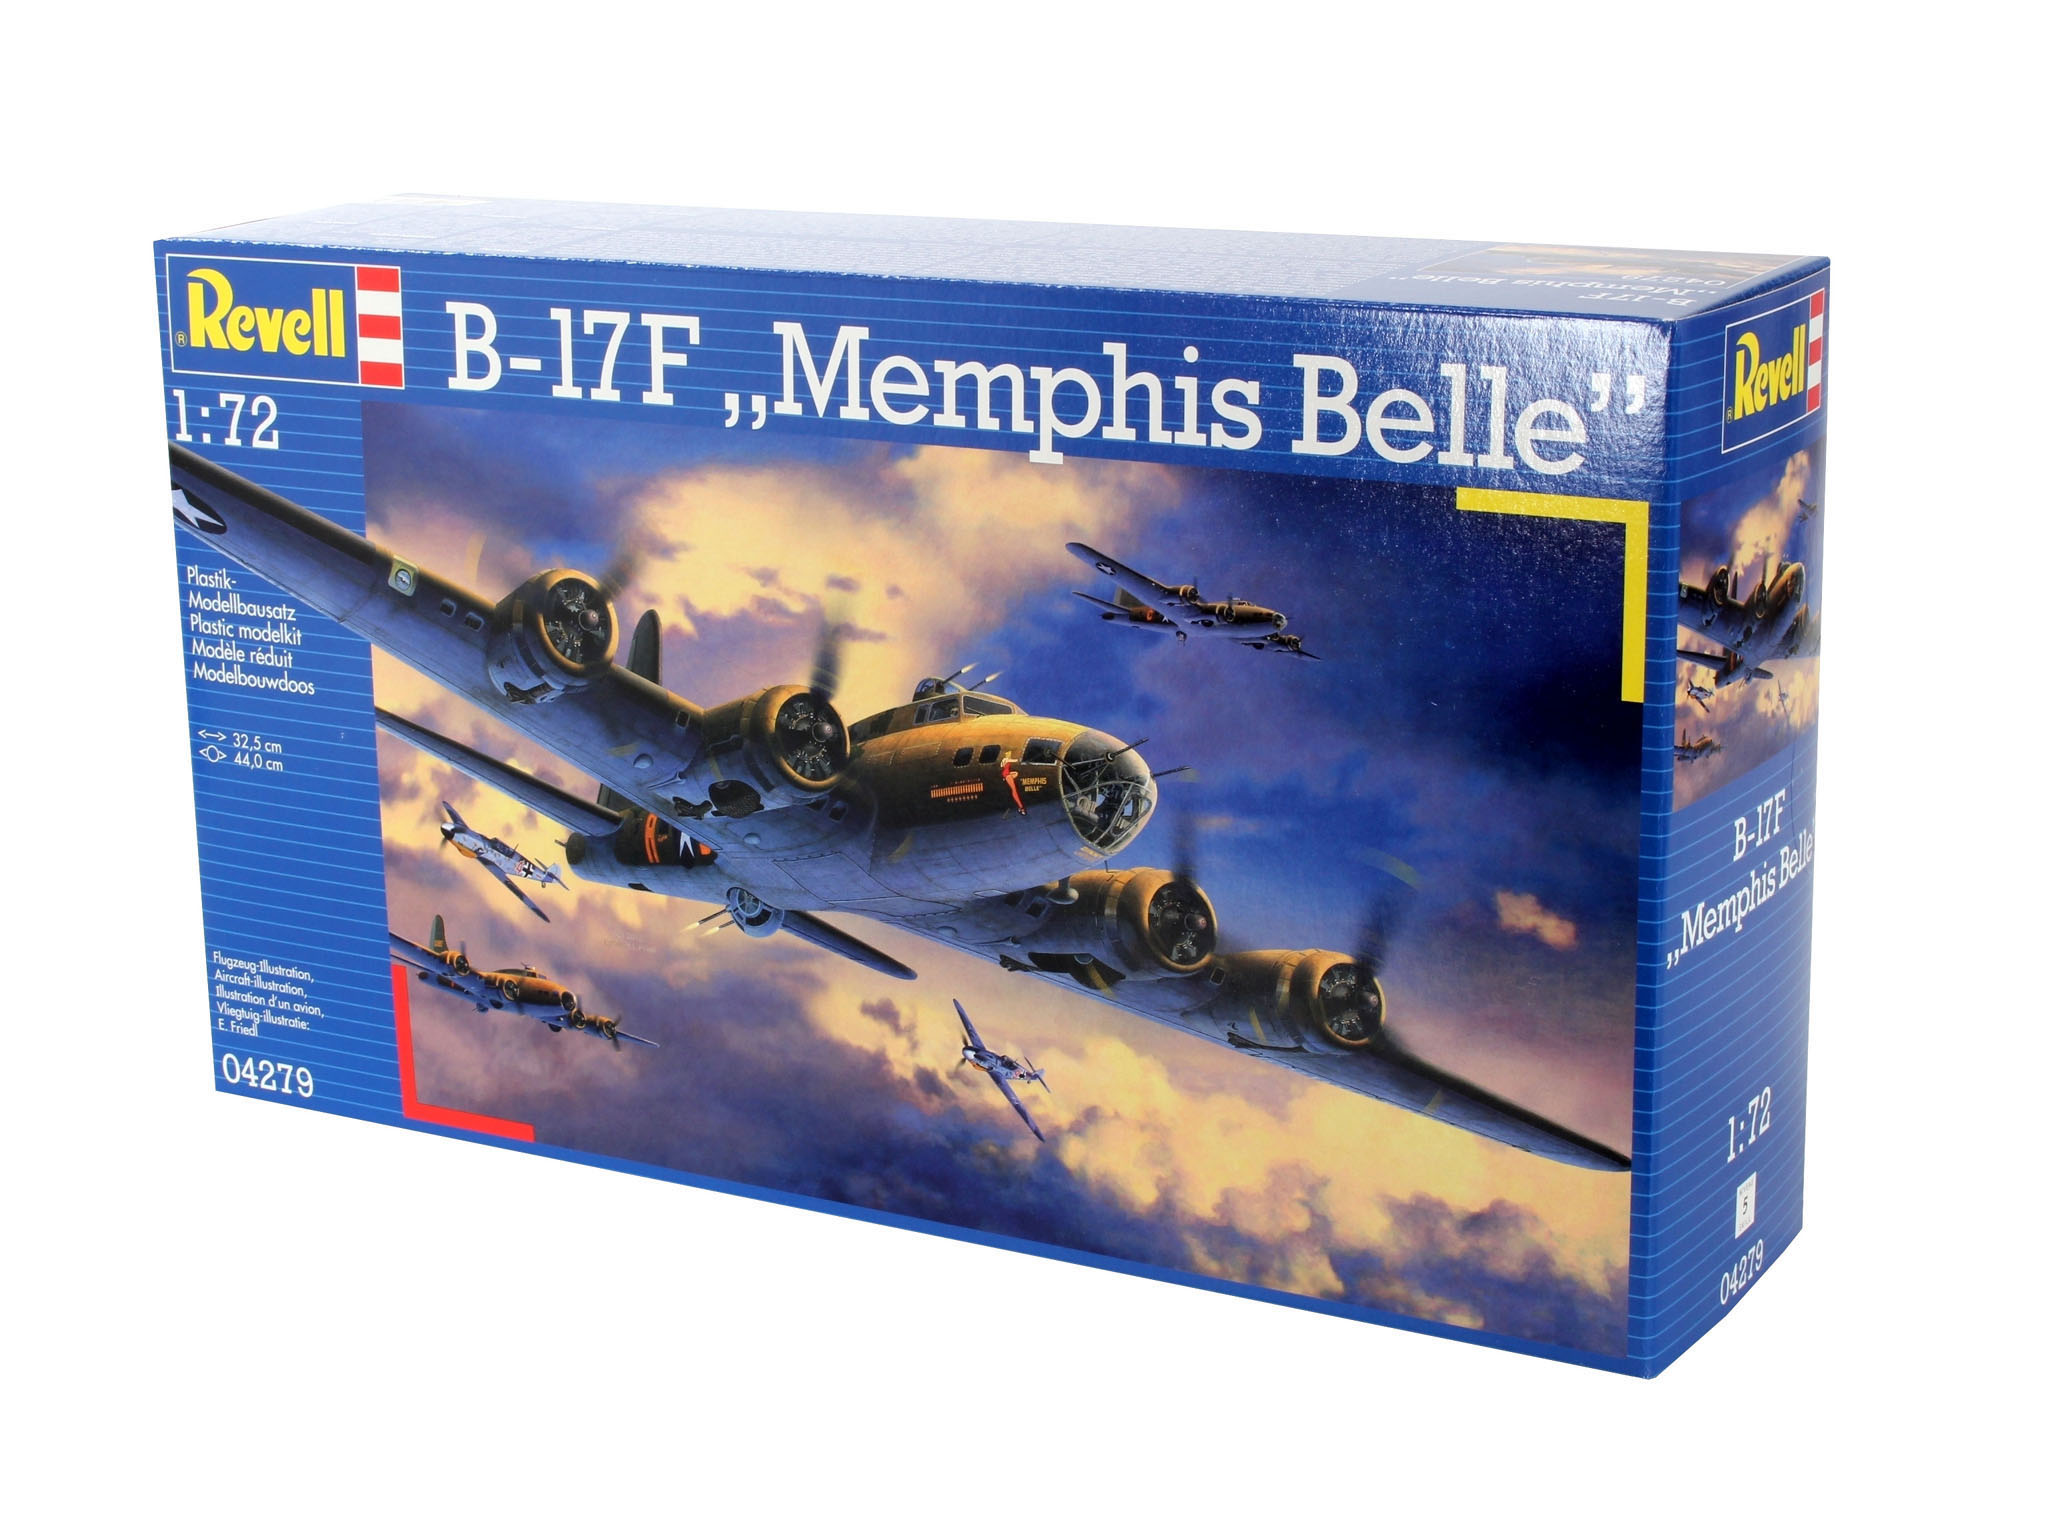 REVELL B17-F Belle Mehrfarbig Bausatz, Memphis